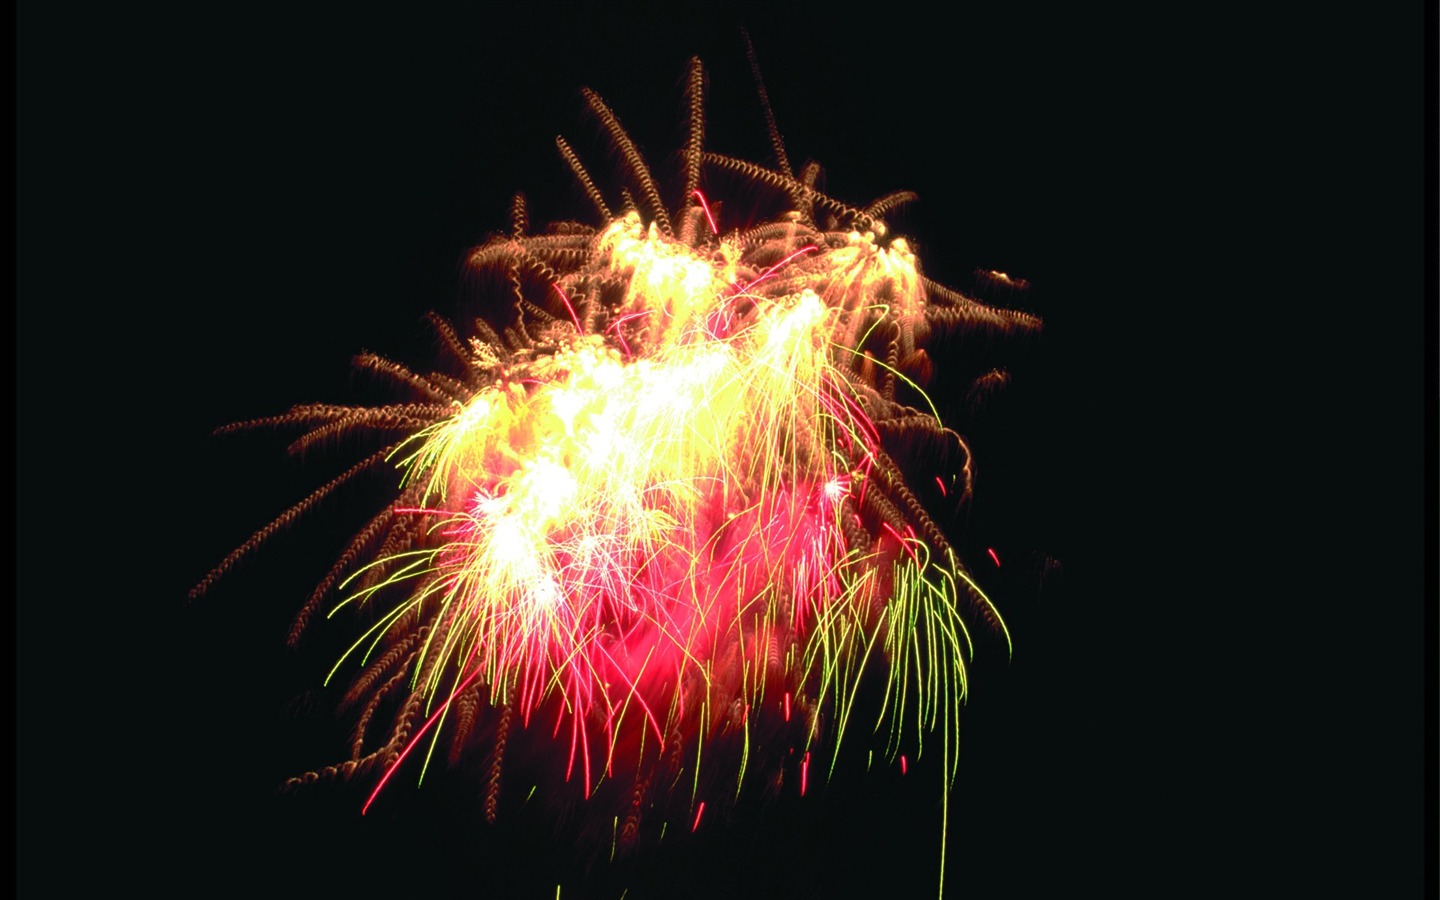 Festival fireworks display wallpaper #44 - 1440x900